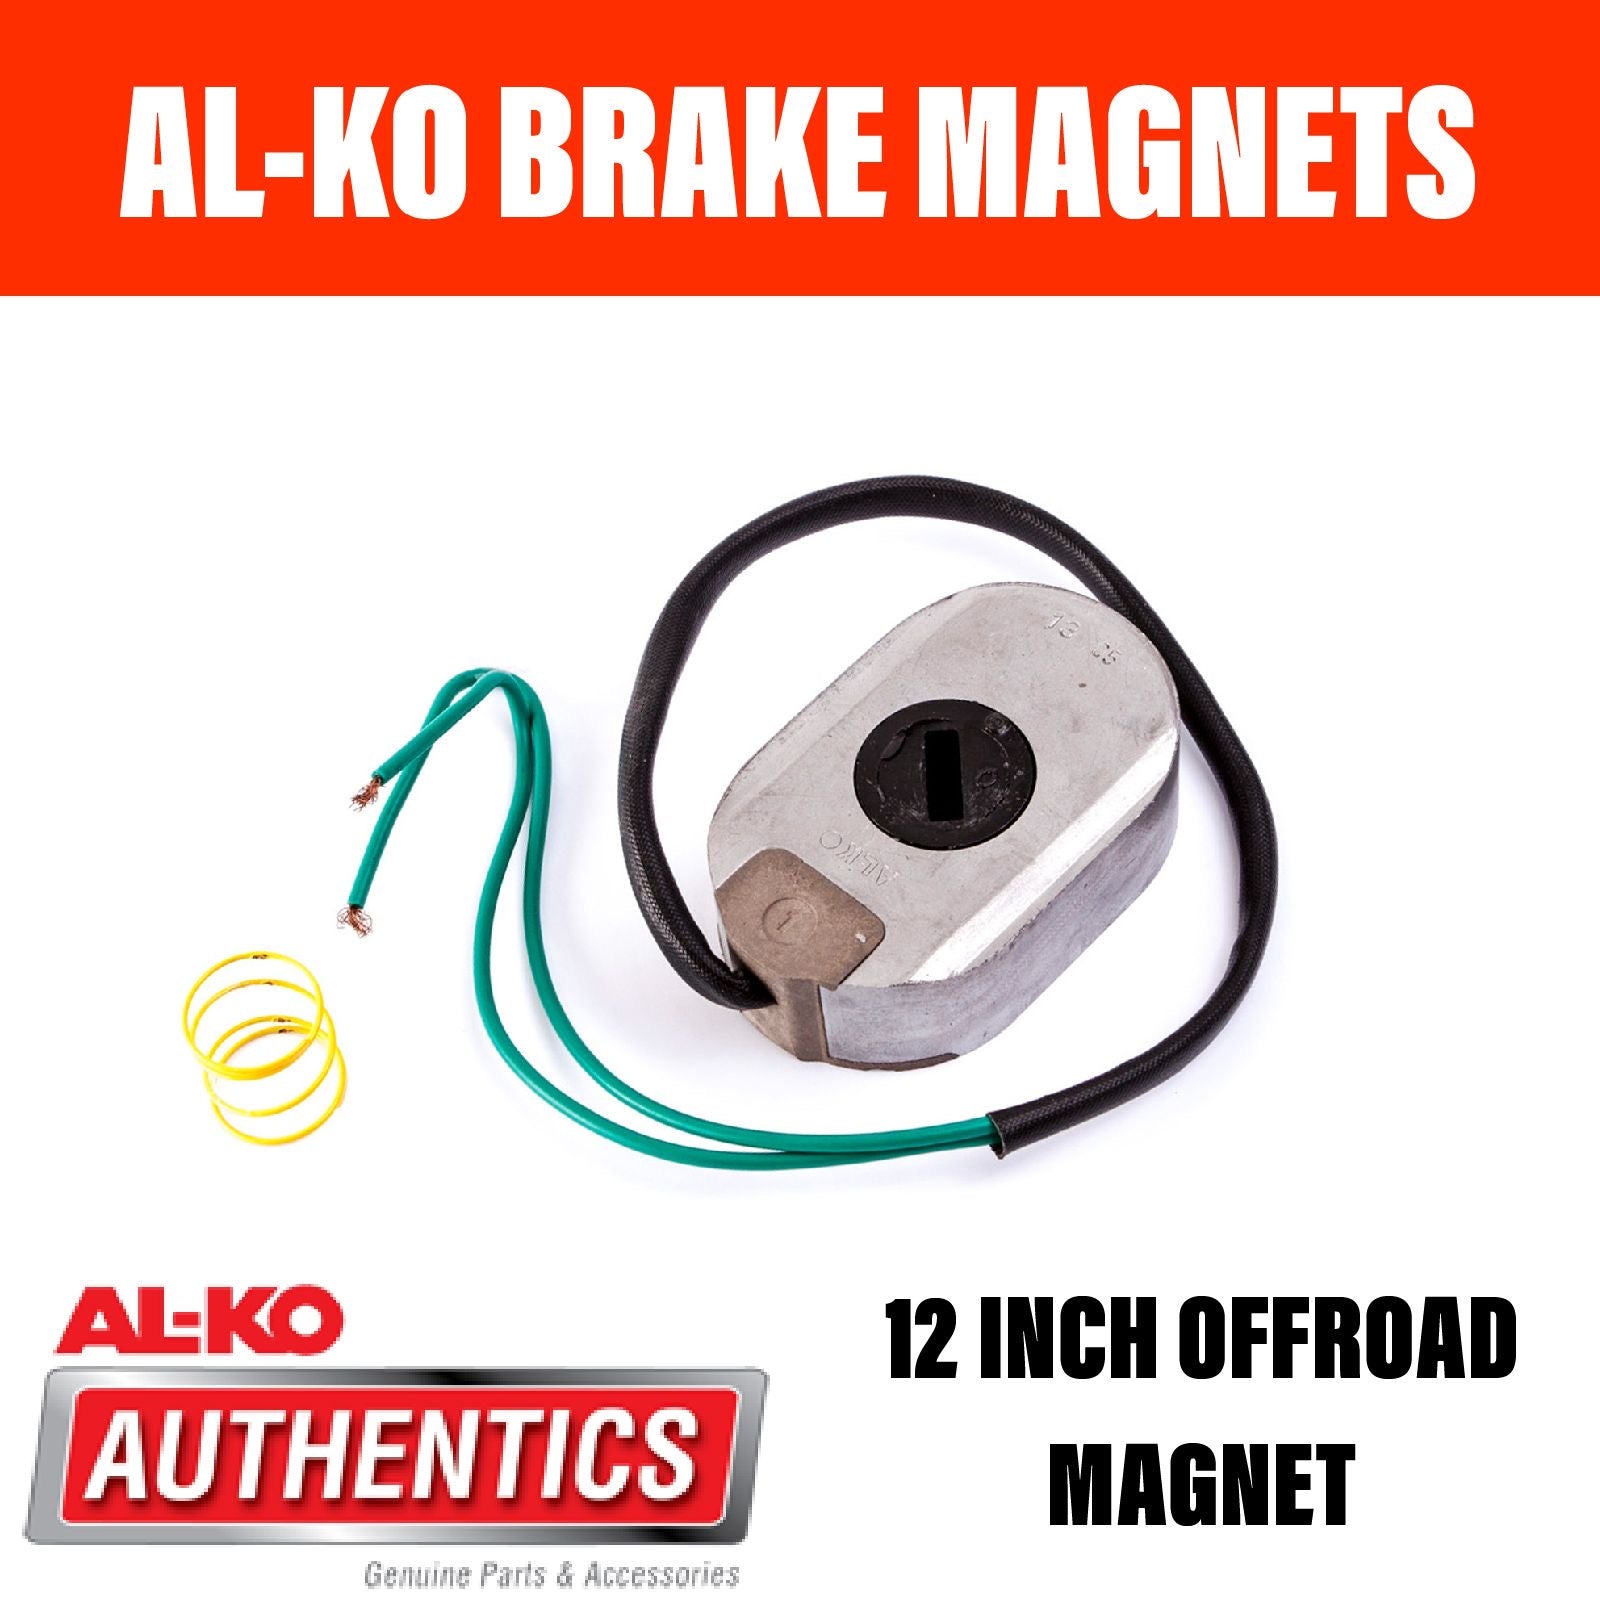 AL-KO 12 INCH OFFROAD MAGNET RIGHT SIDE